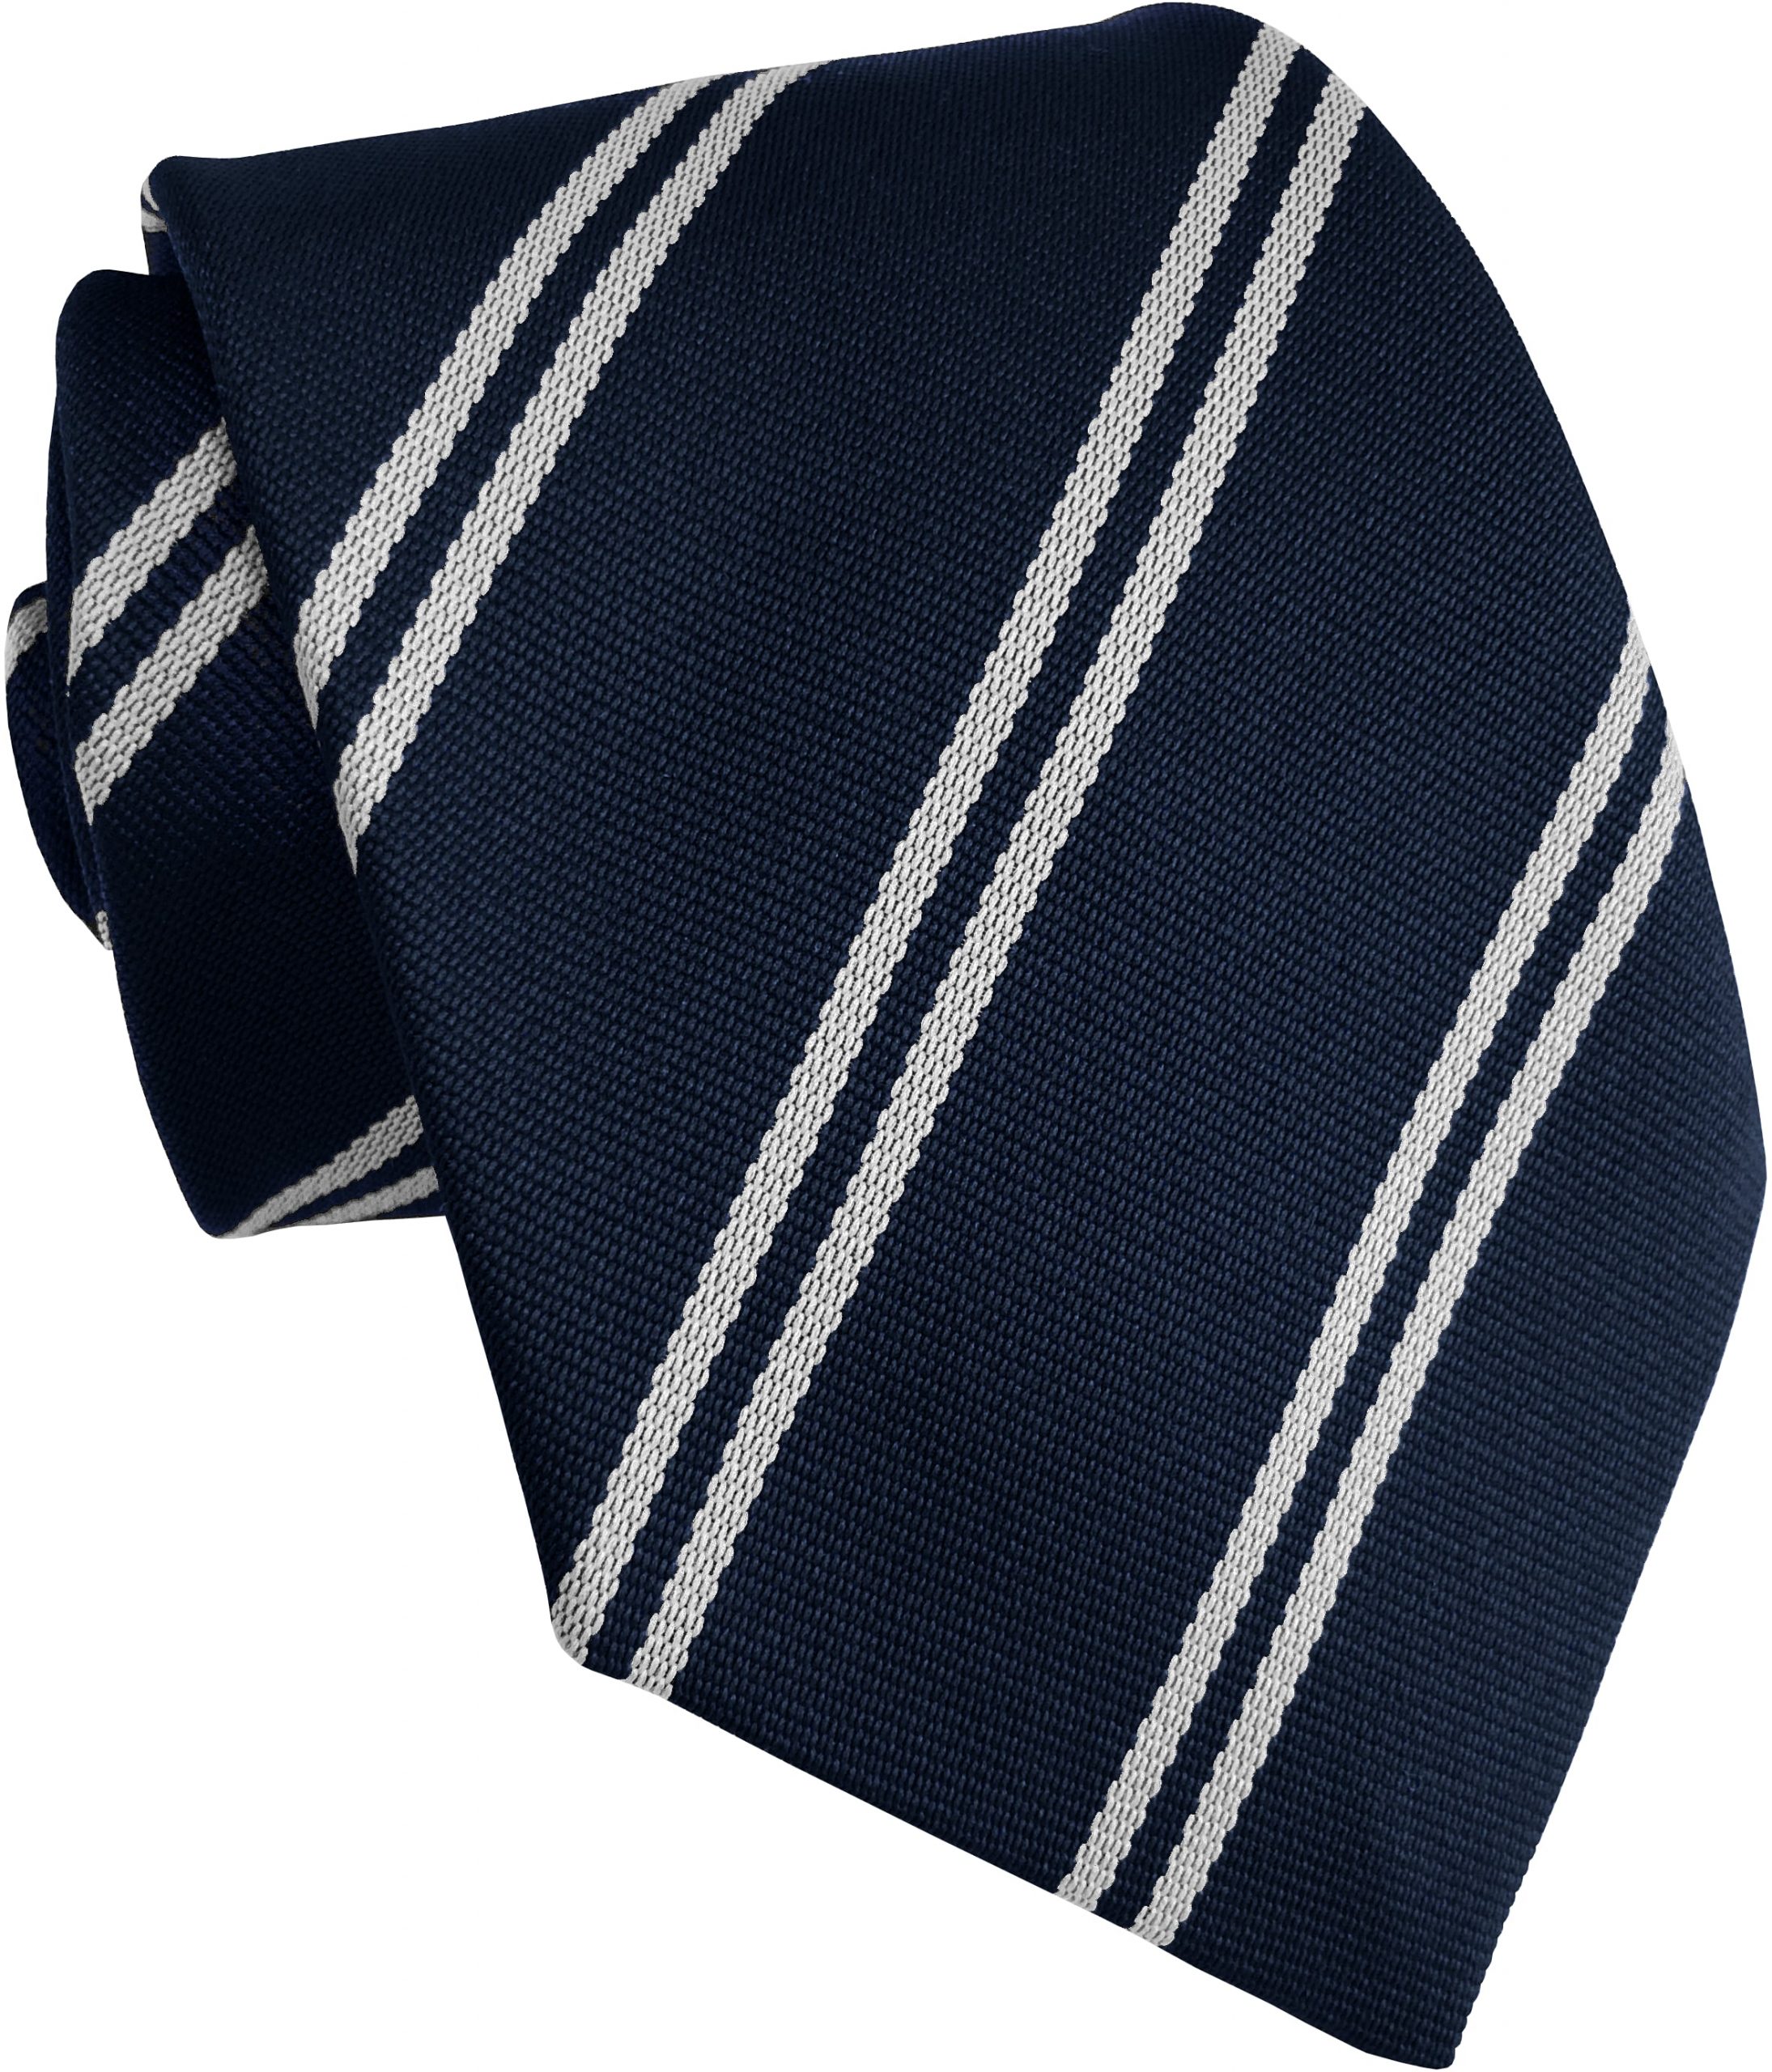 Black and White Double Stripe High School Tie - British School Tie Store